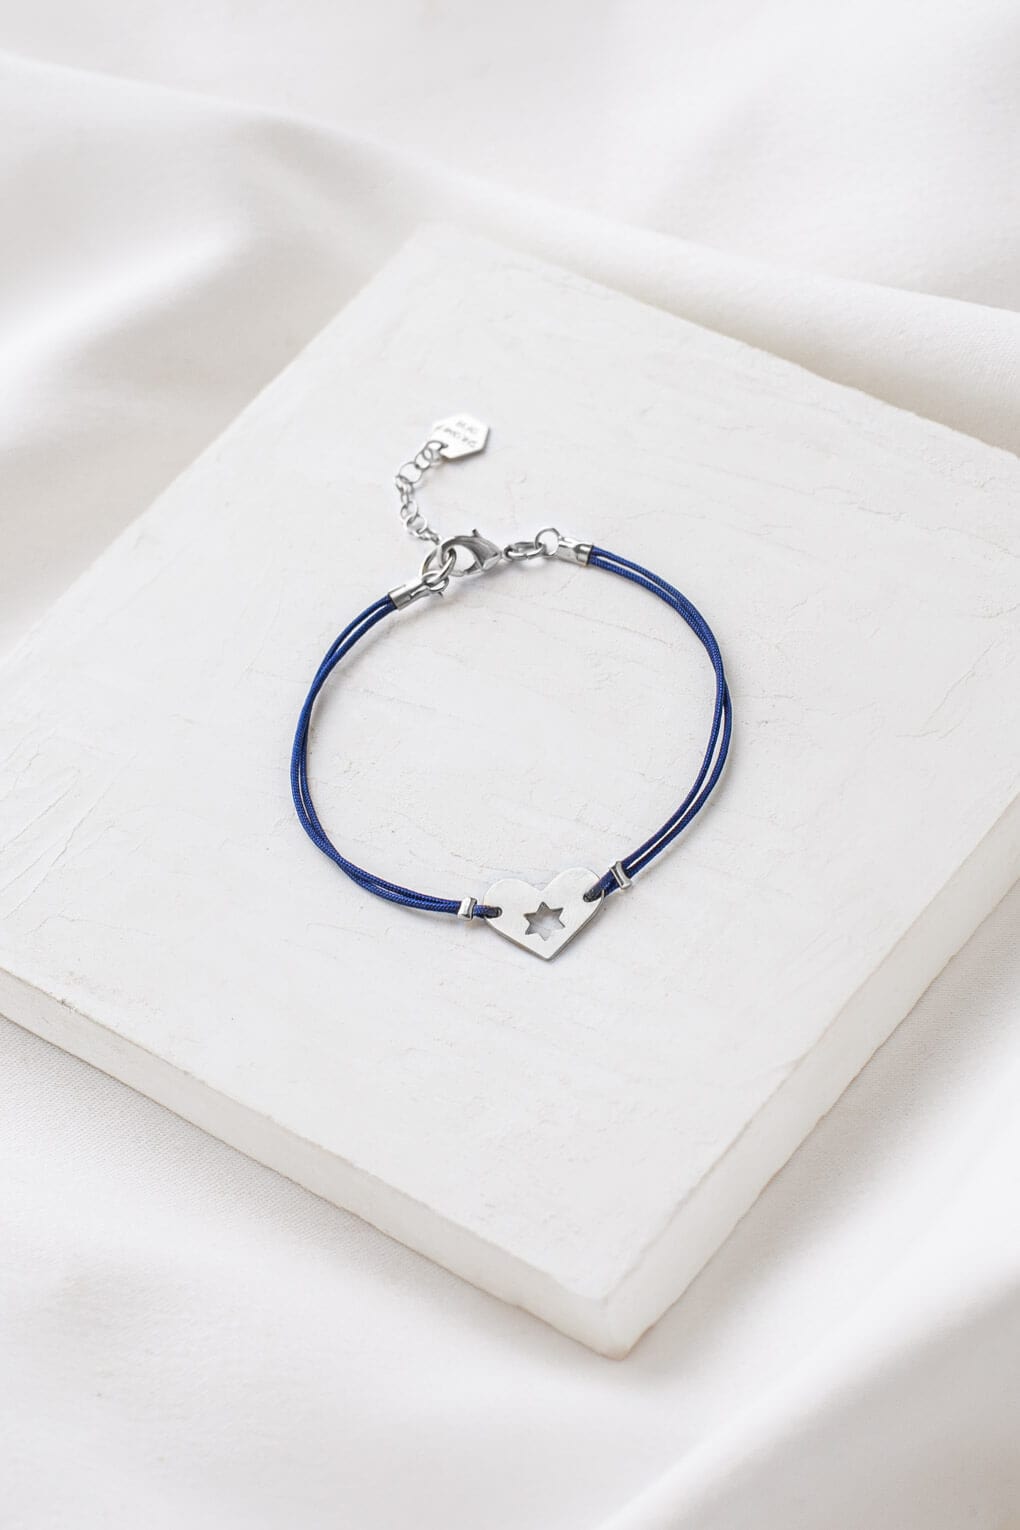 Shlomit Ofir Bracelets Silver Israel At Heart Bracelet - Dark Blue